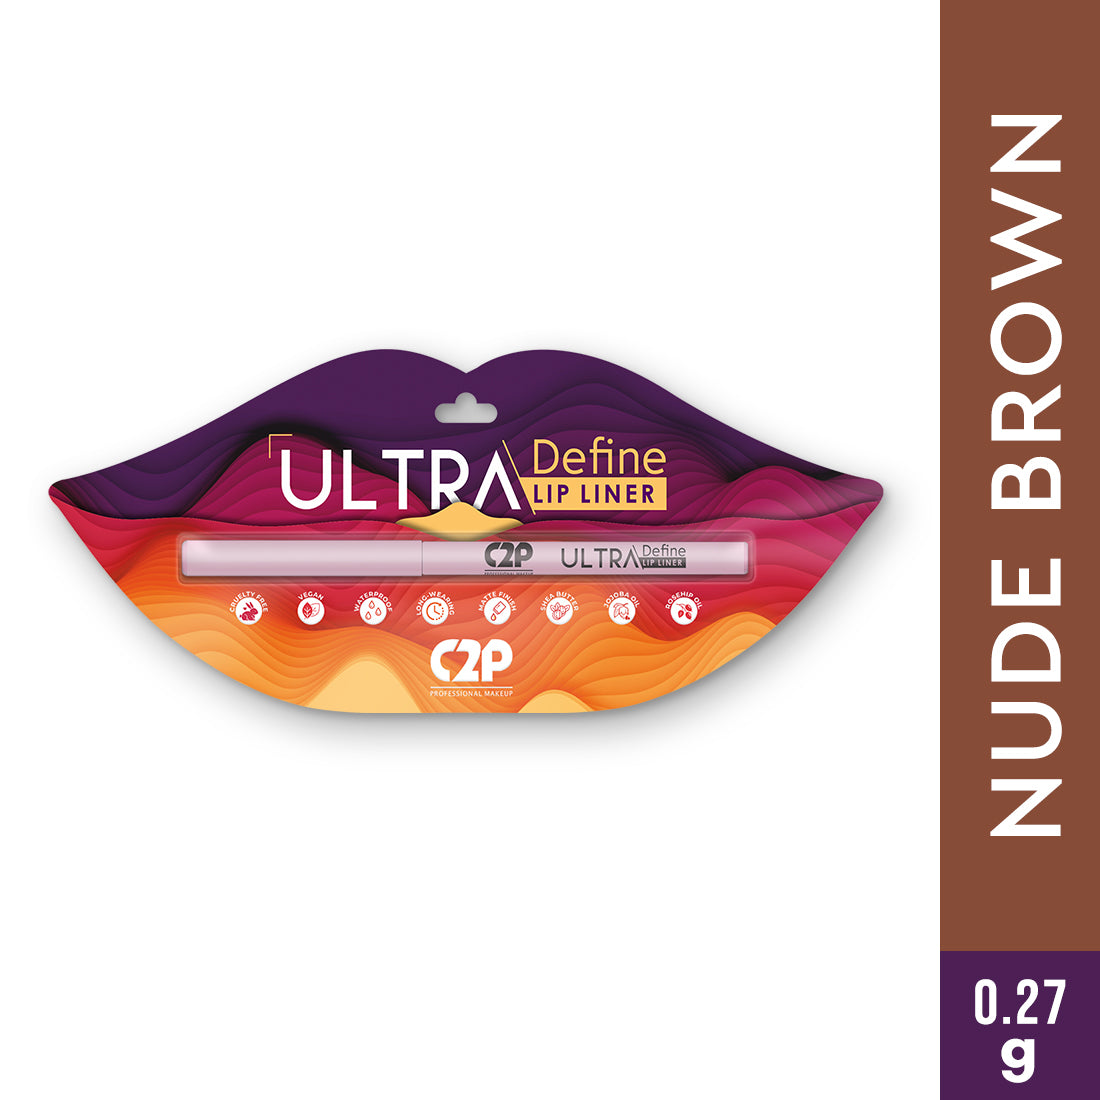 ULTRA DEFINE LIP LINER (0.27g)